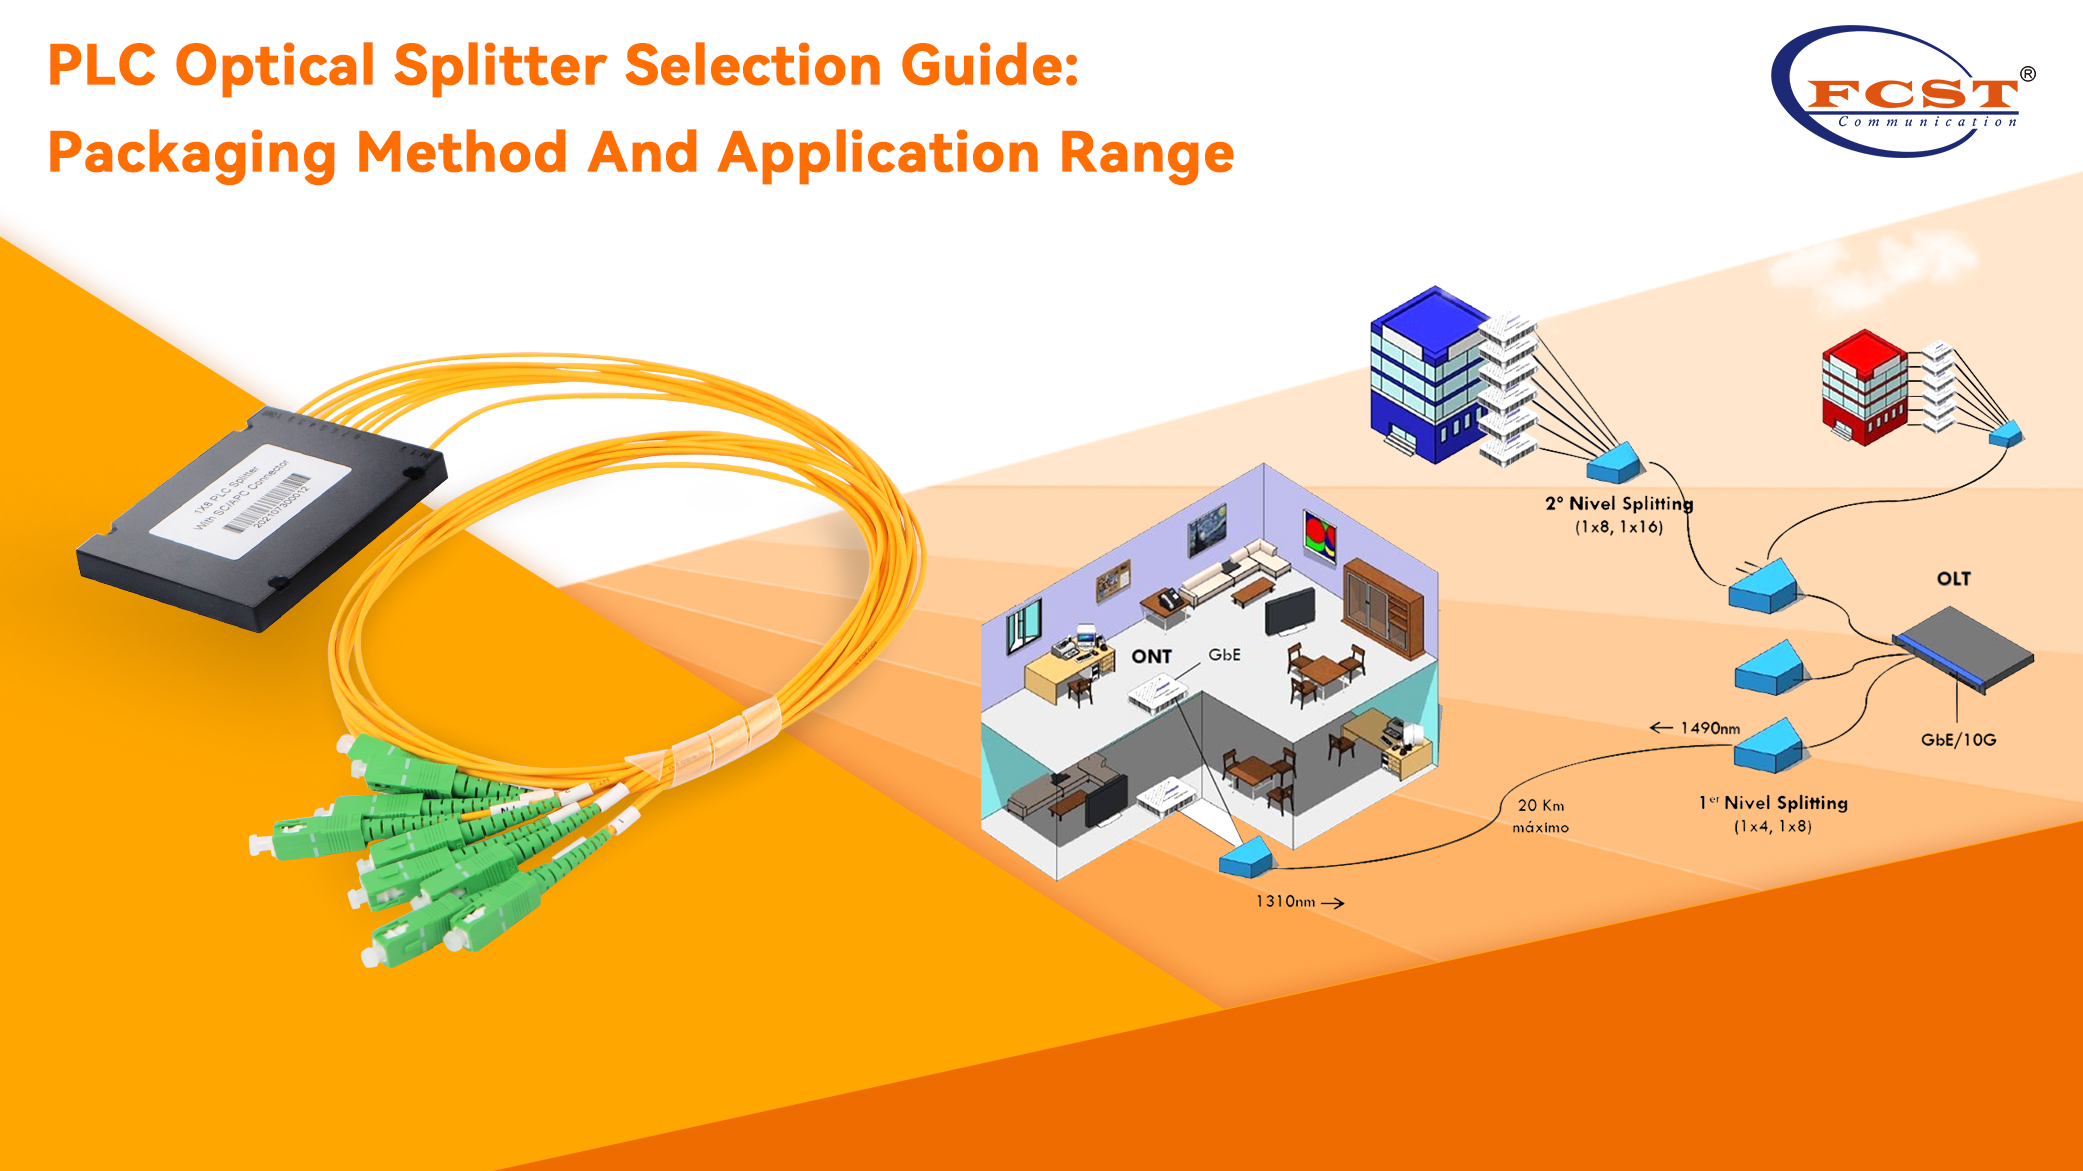 PLC Optical Splitter Selection Guide: Packaging Method And Application Range